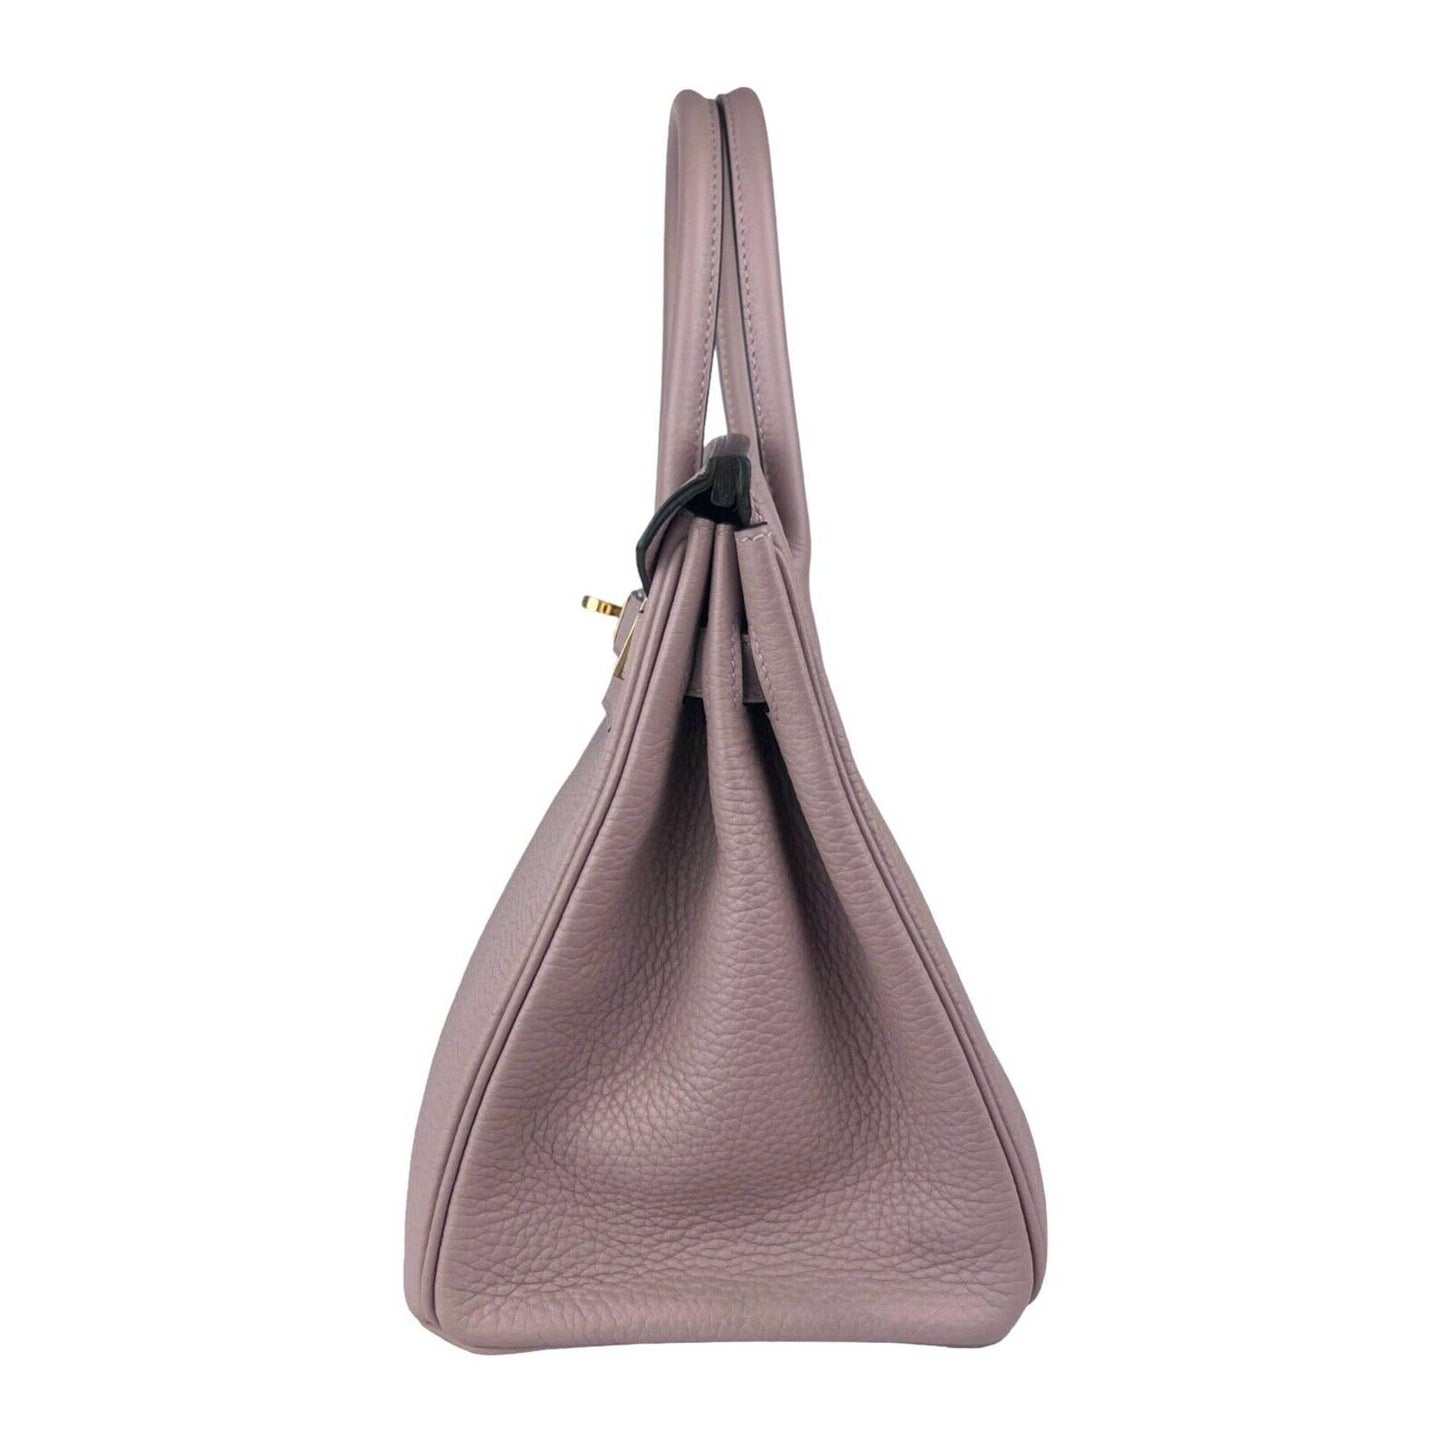 Hermes Birkin 30 Glycine Togo Leather GoldHardware Handbag Bag RARE